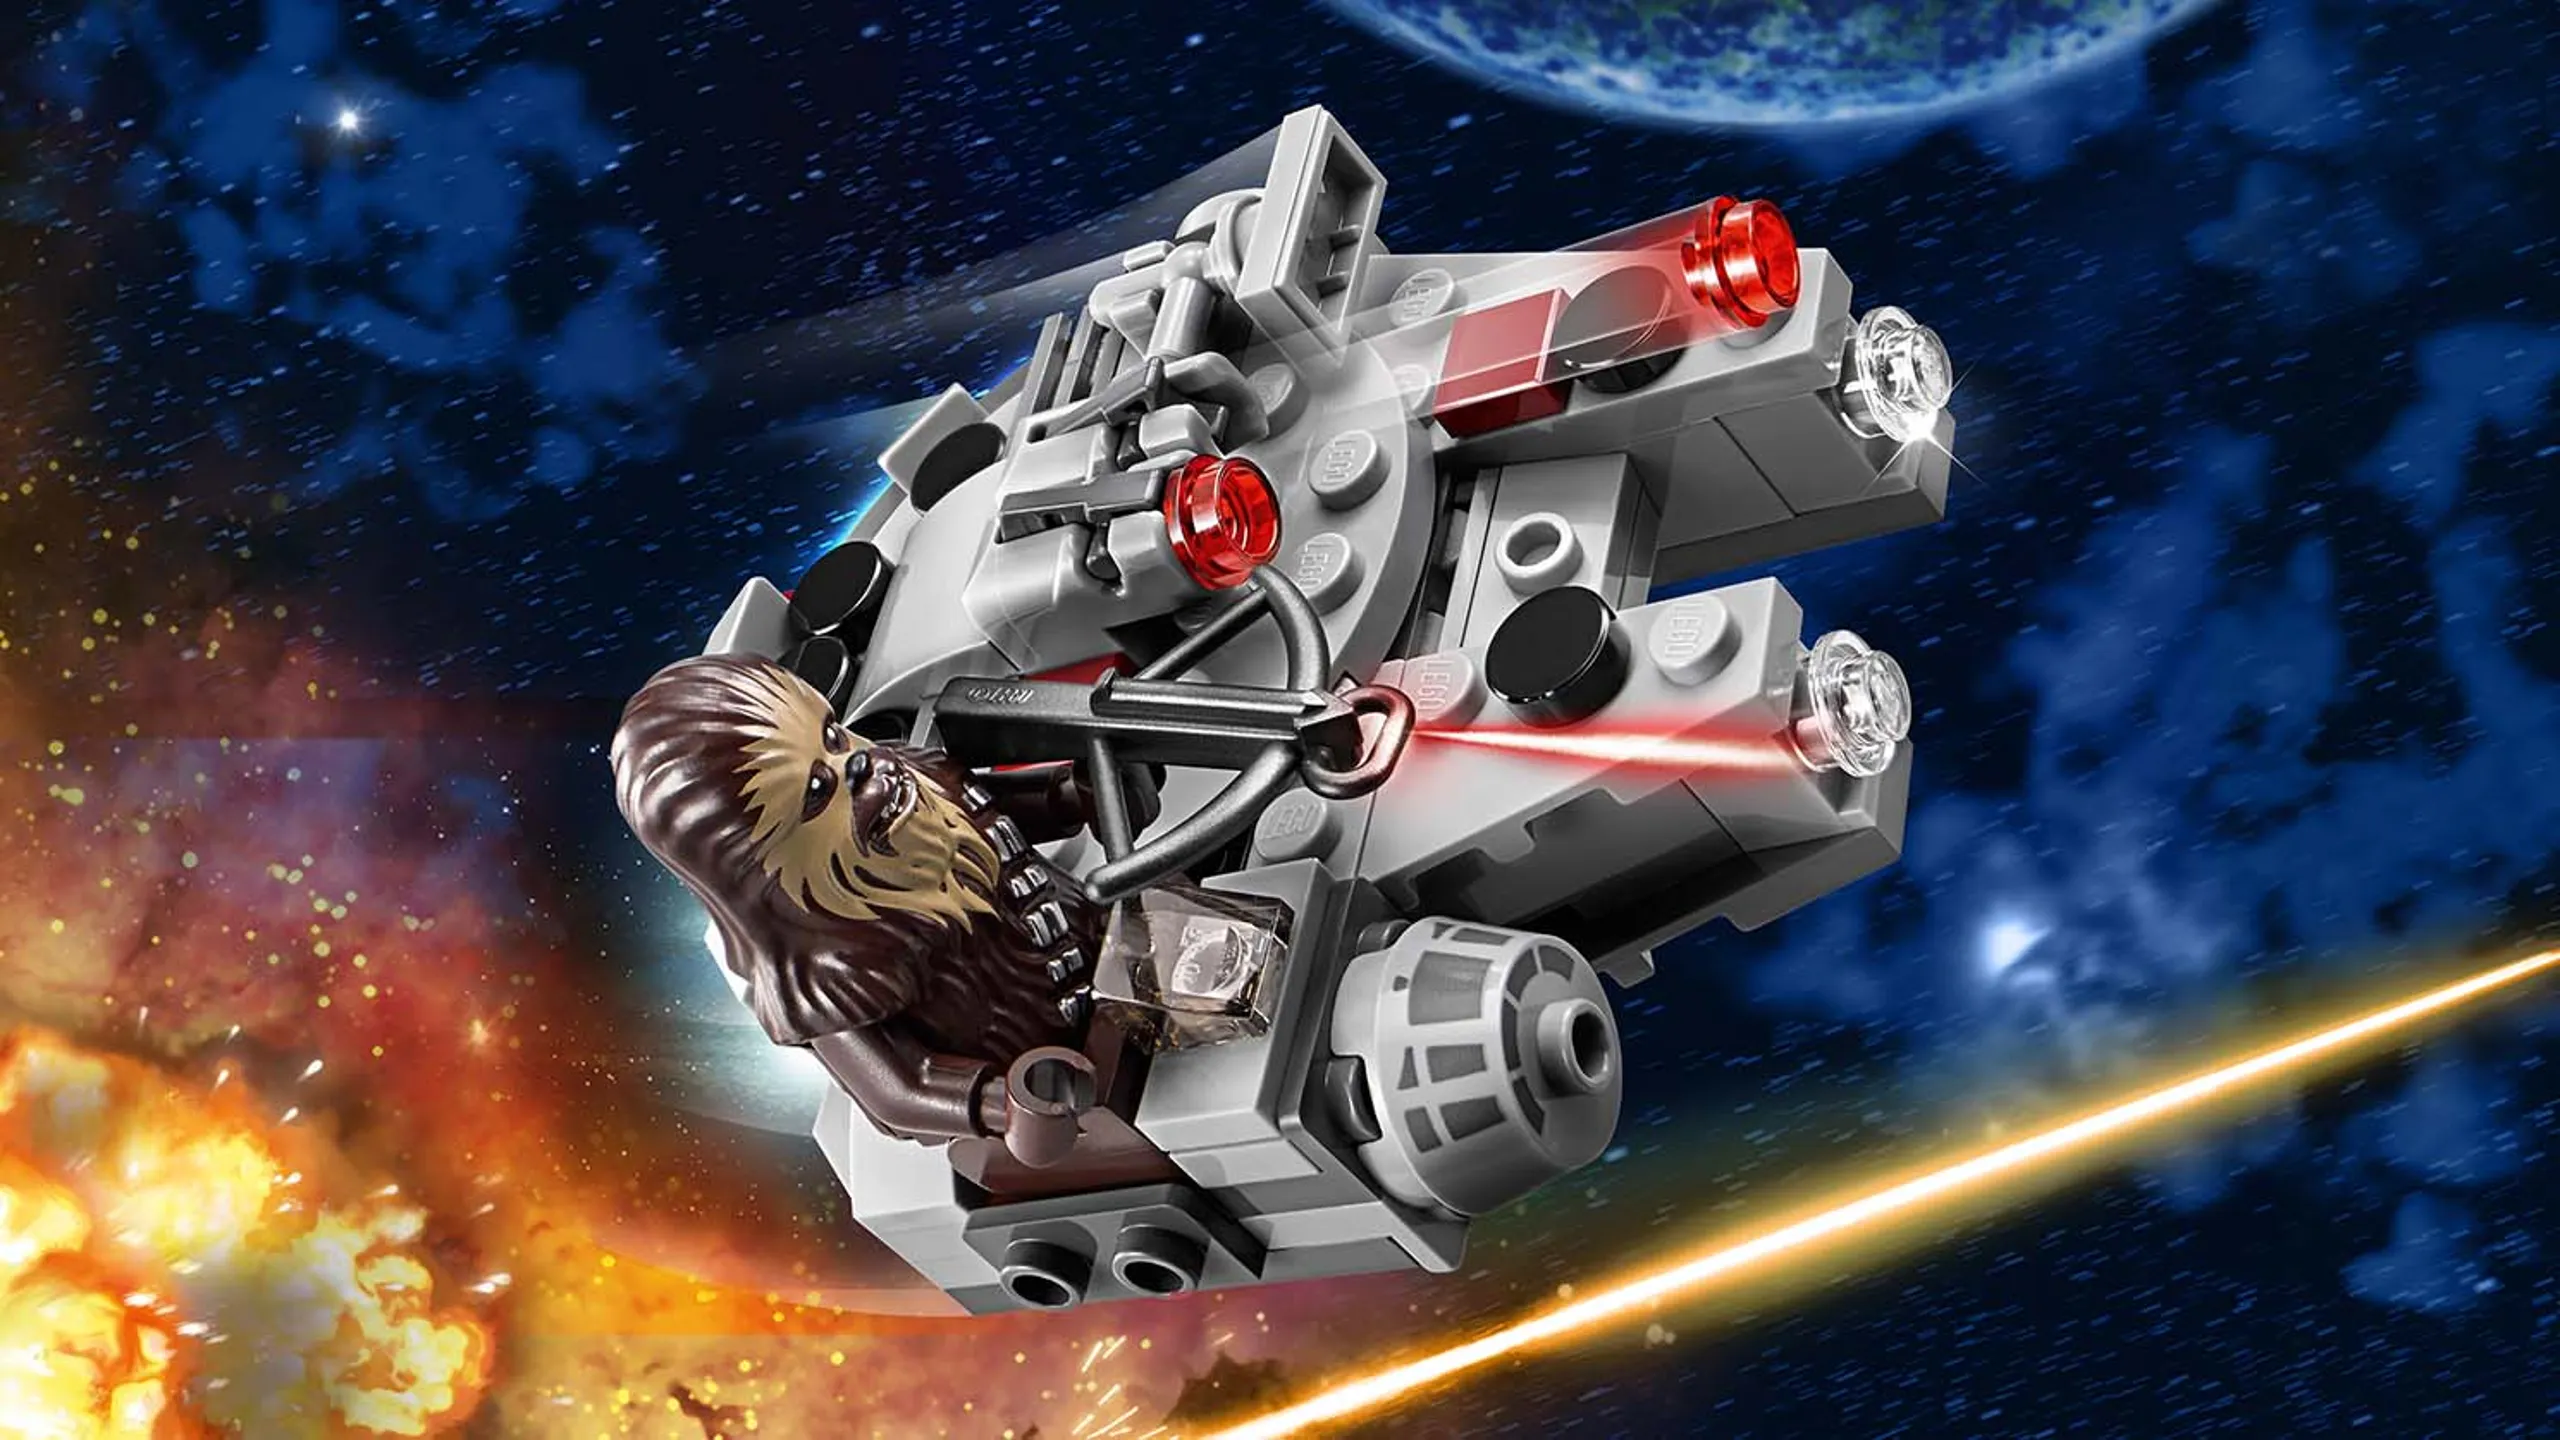 LEGO Star Wars Millennium Falcon™ Microfighter - 75193 - Chewbacca flying into battle in the Millennium Falcon